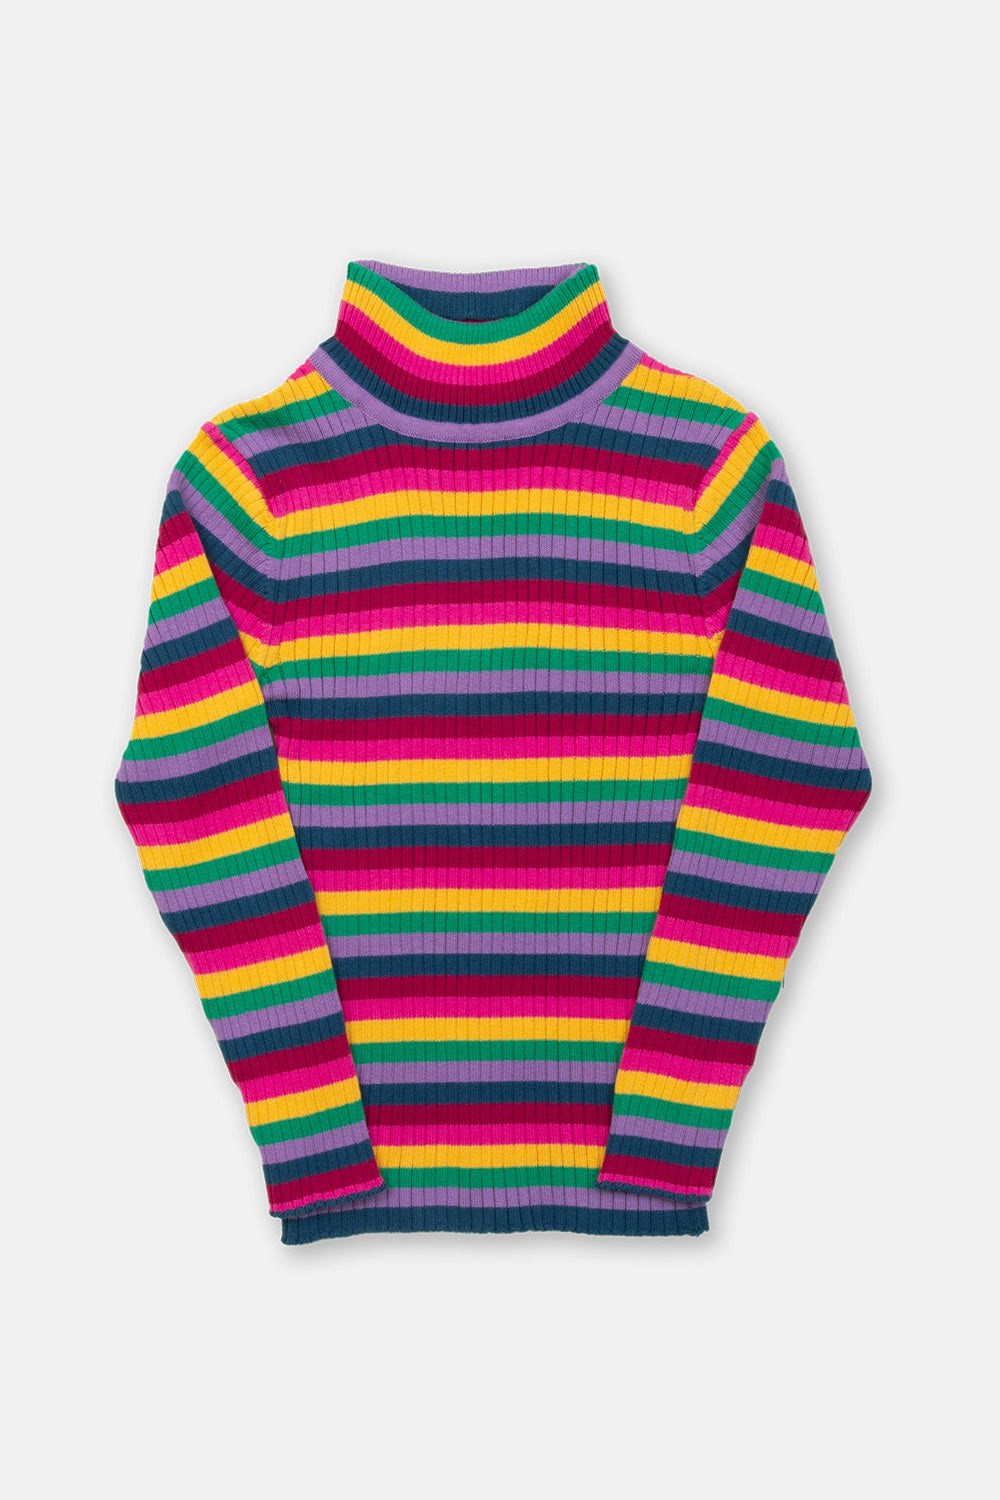 Rainbow Knit Kids Organic Cotton Turtle Top -